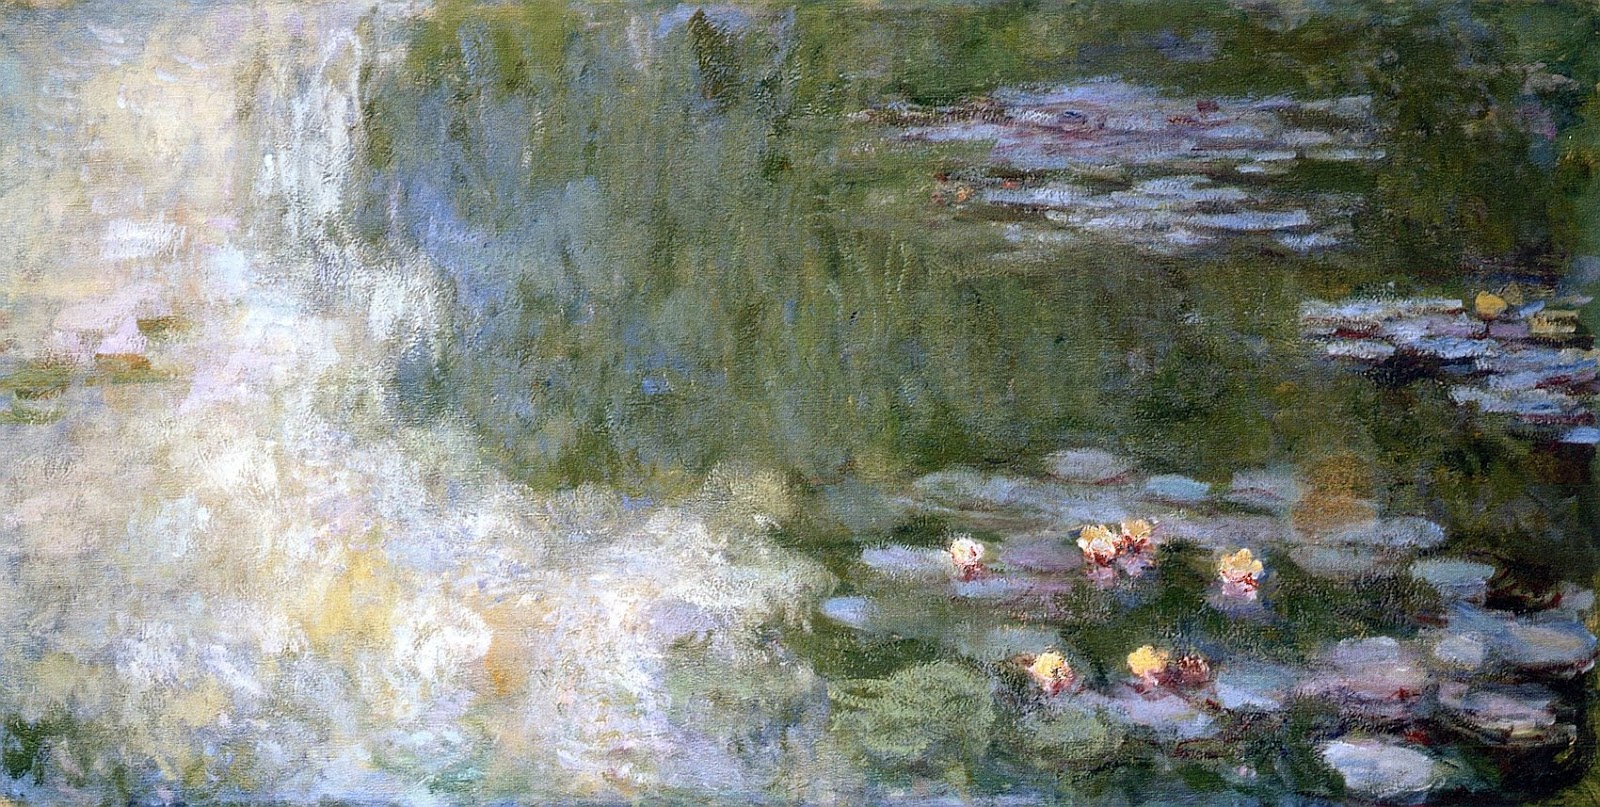 Claude+Monet-1840-1926 (418).jpg